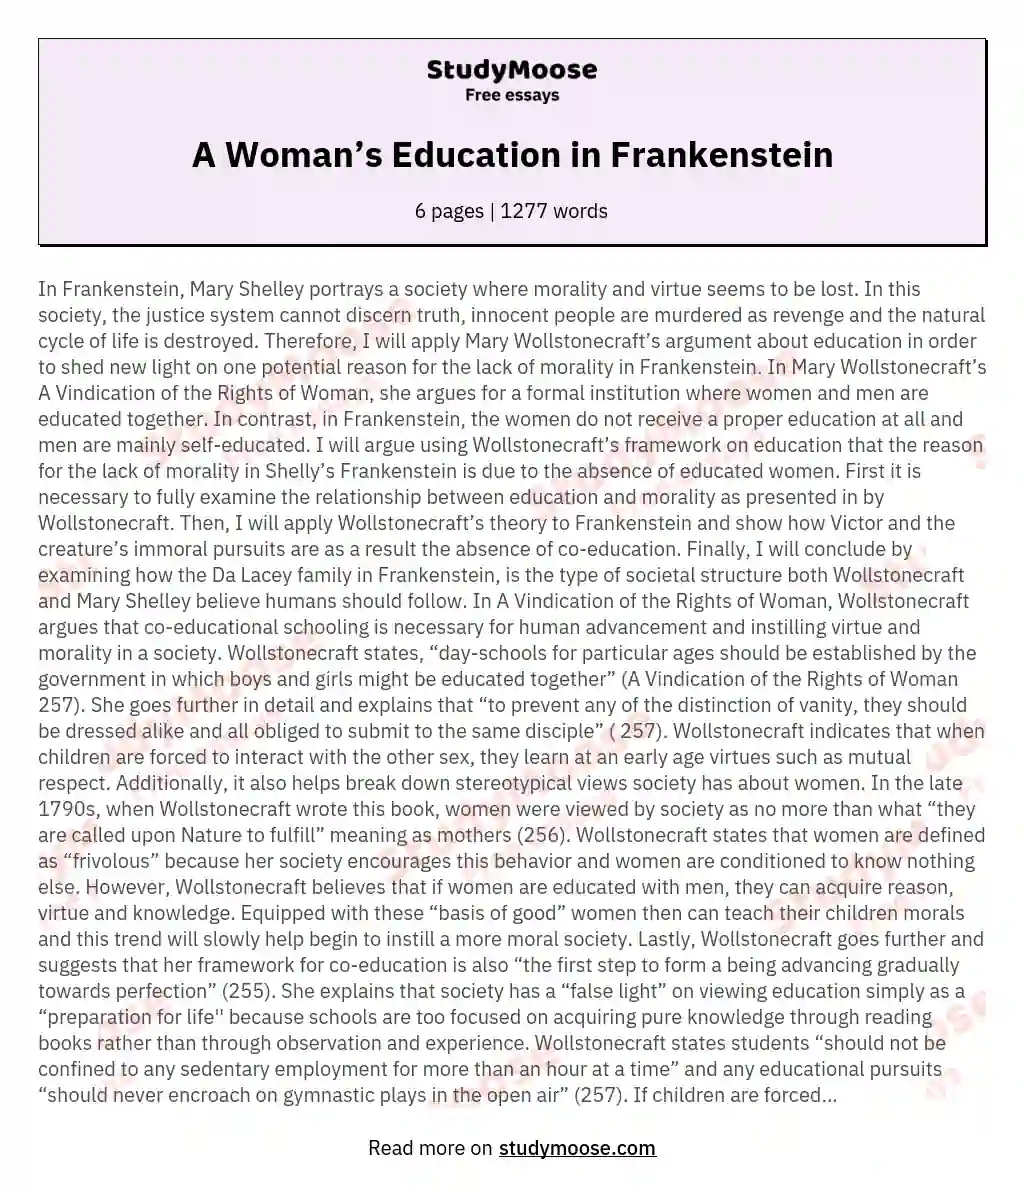 A Woman’s Education in Frankenstein essay